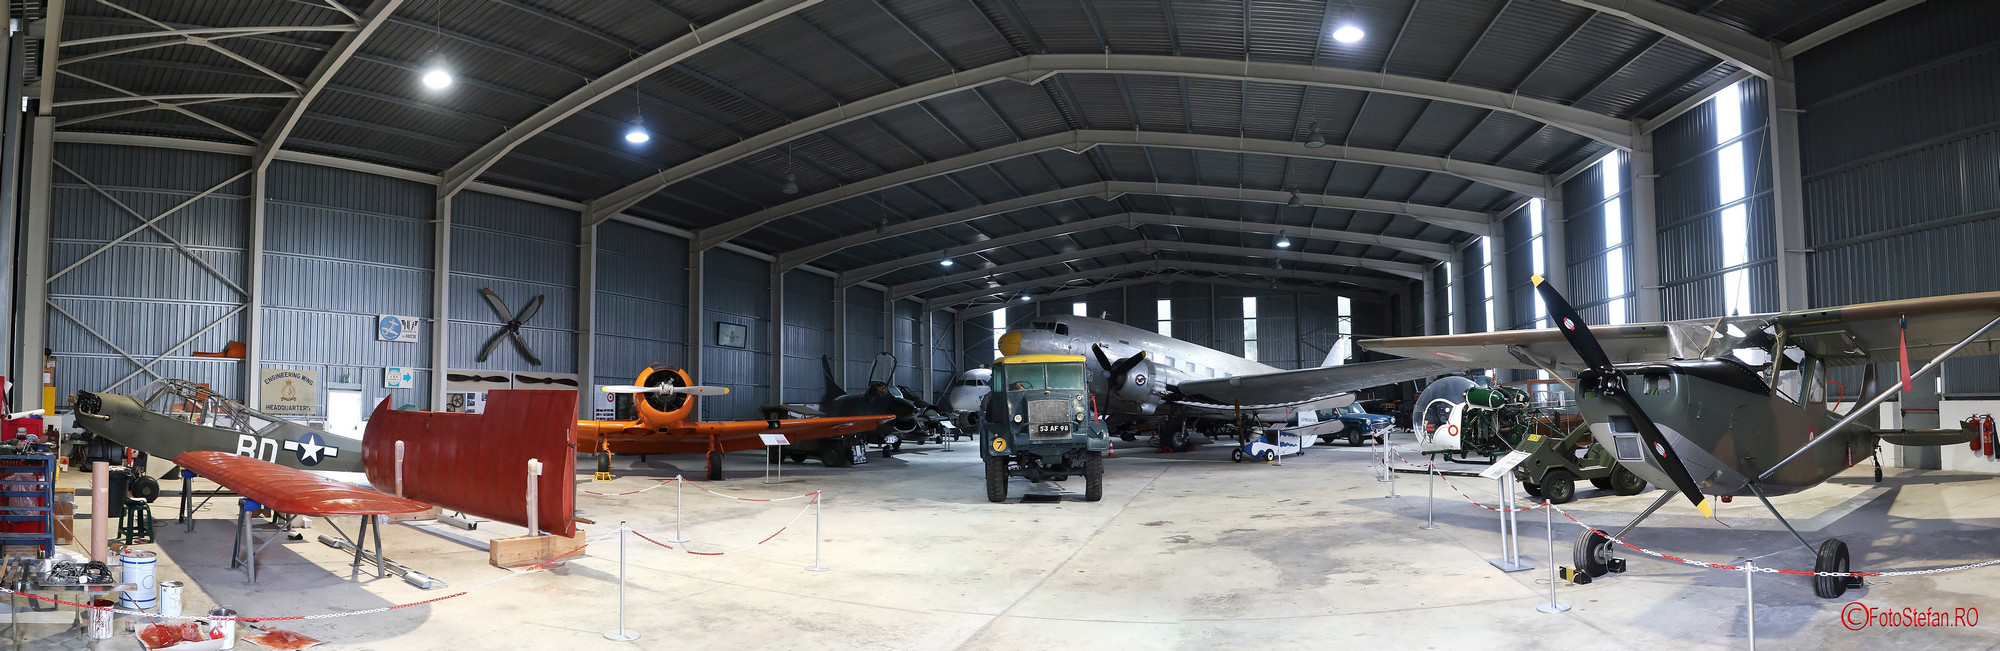 poza panoramica muzeul aviatiei malta avioane